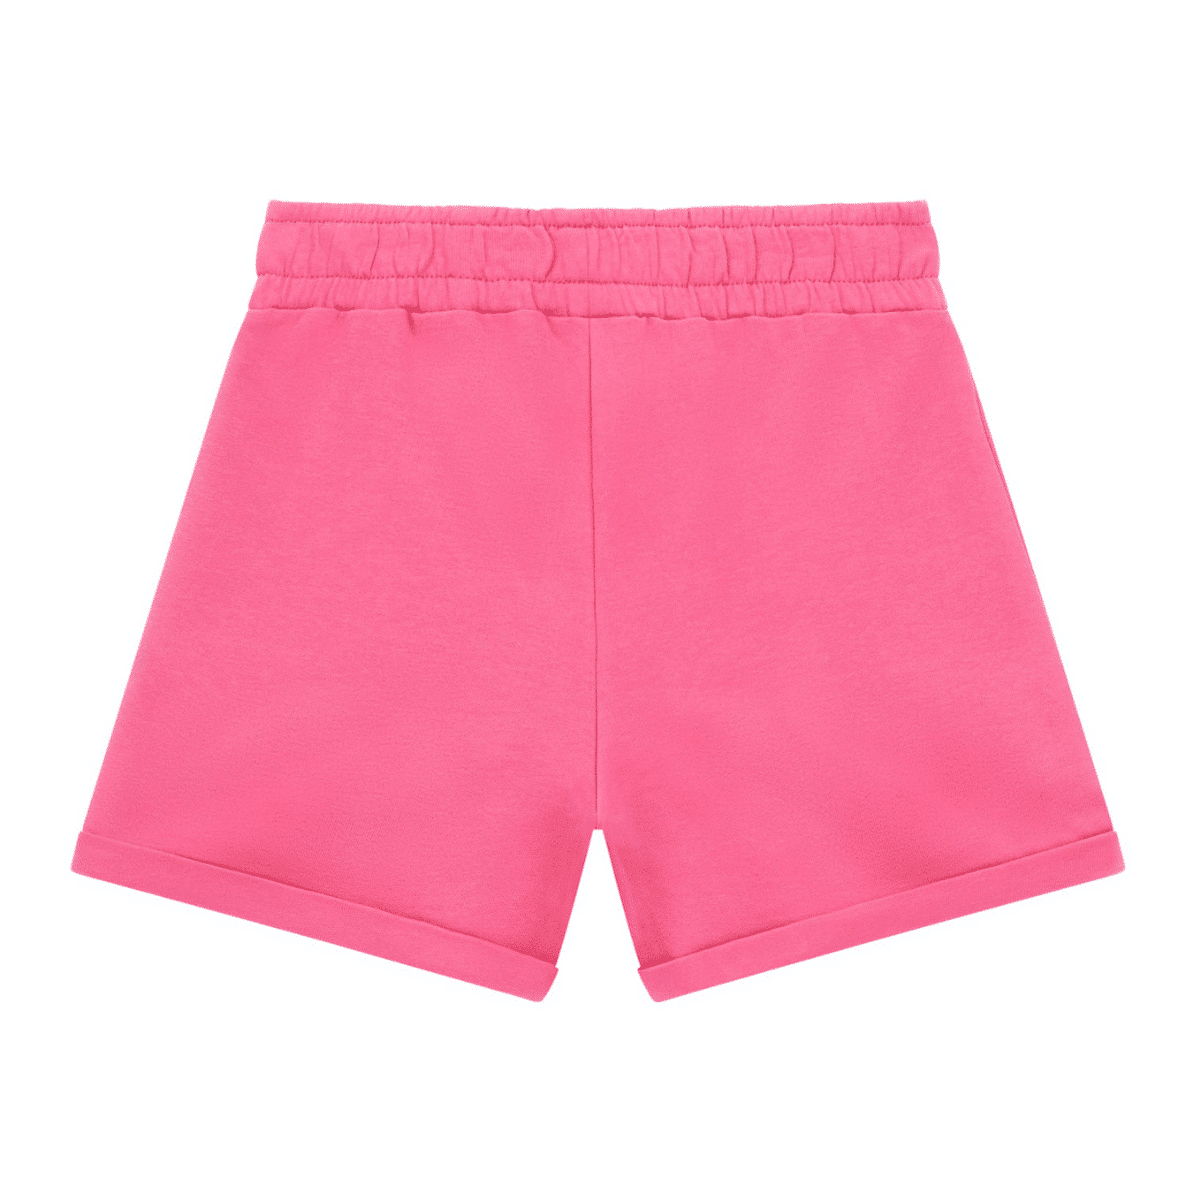 guess girls active shorts pink back view